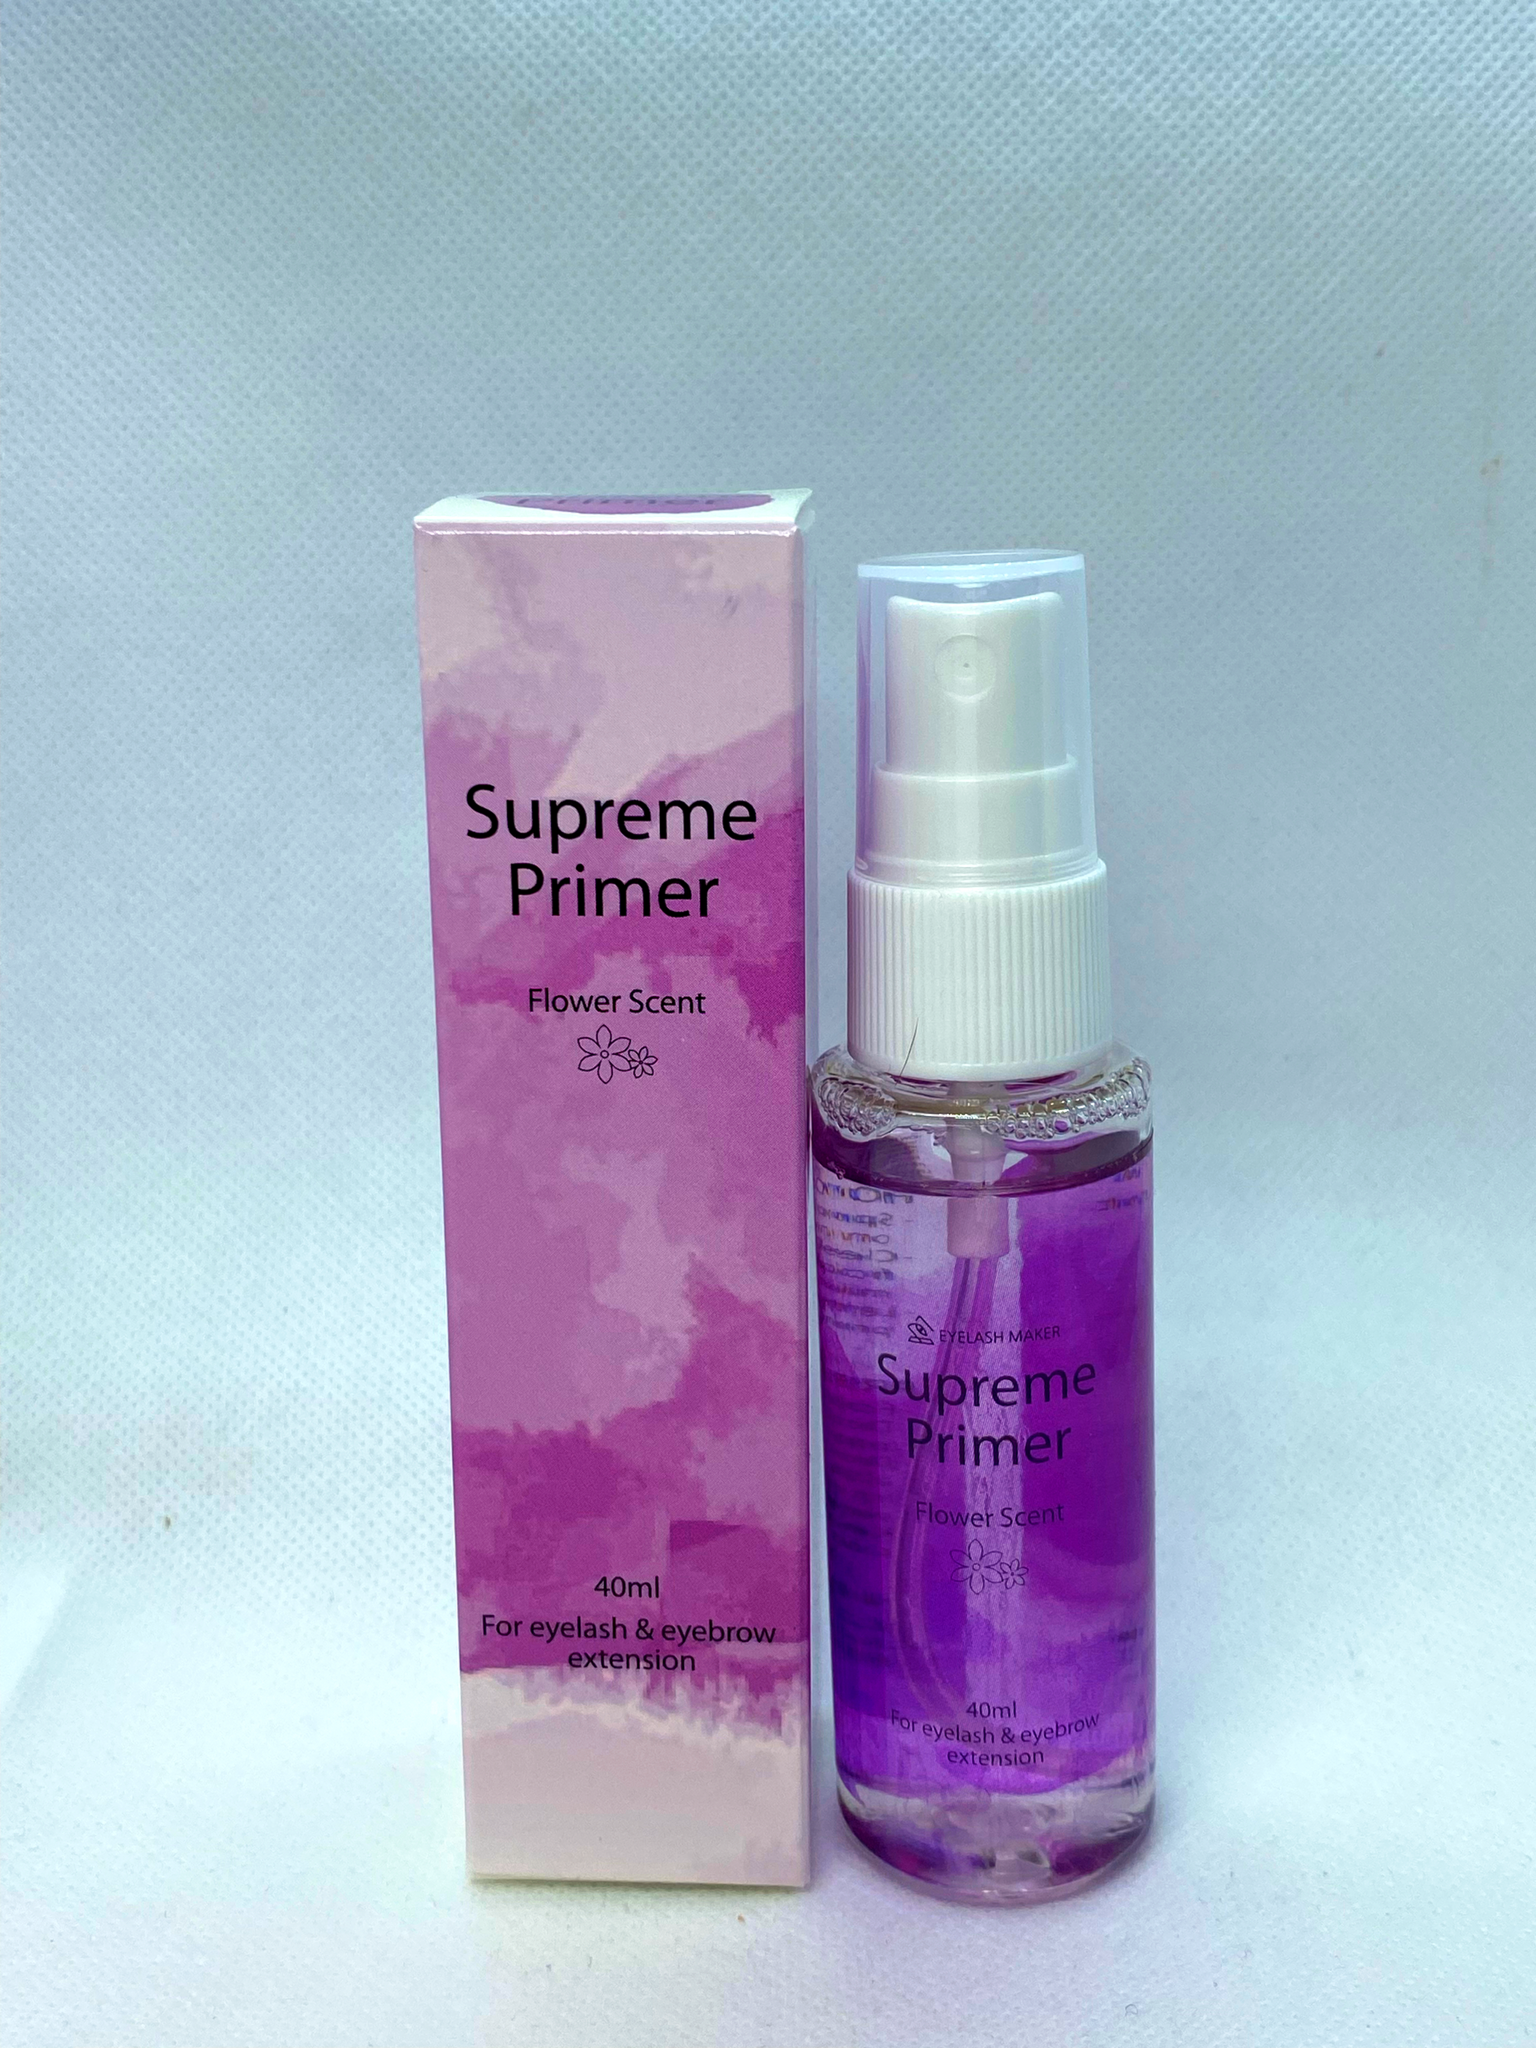 Supreme Lash Primer Spray (Flower Scent) -  Beautiful Product! Very Popular!